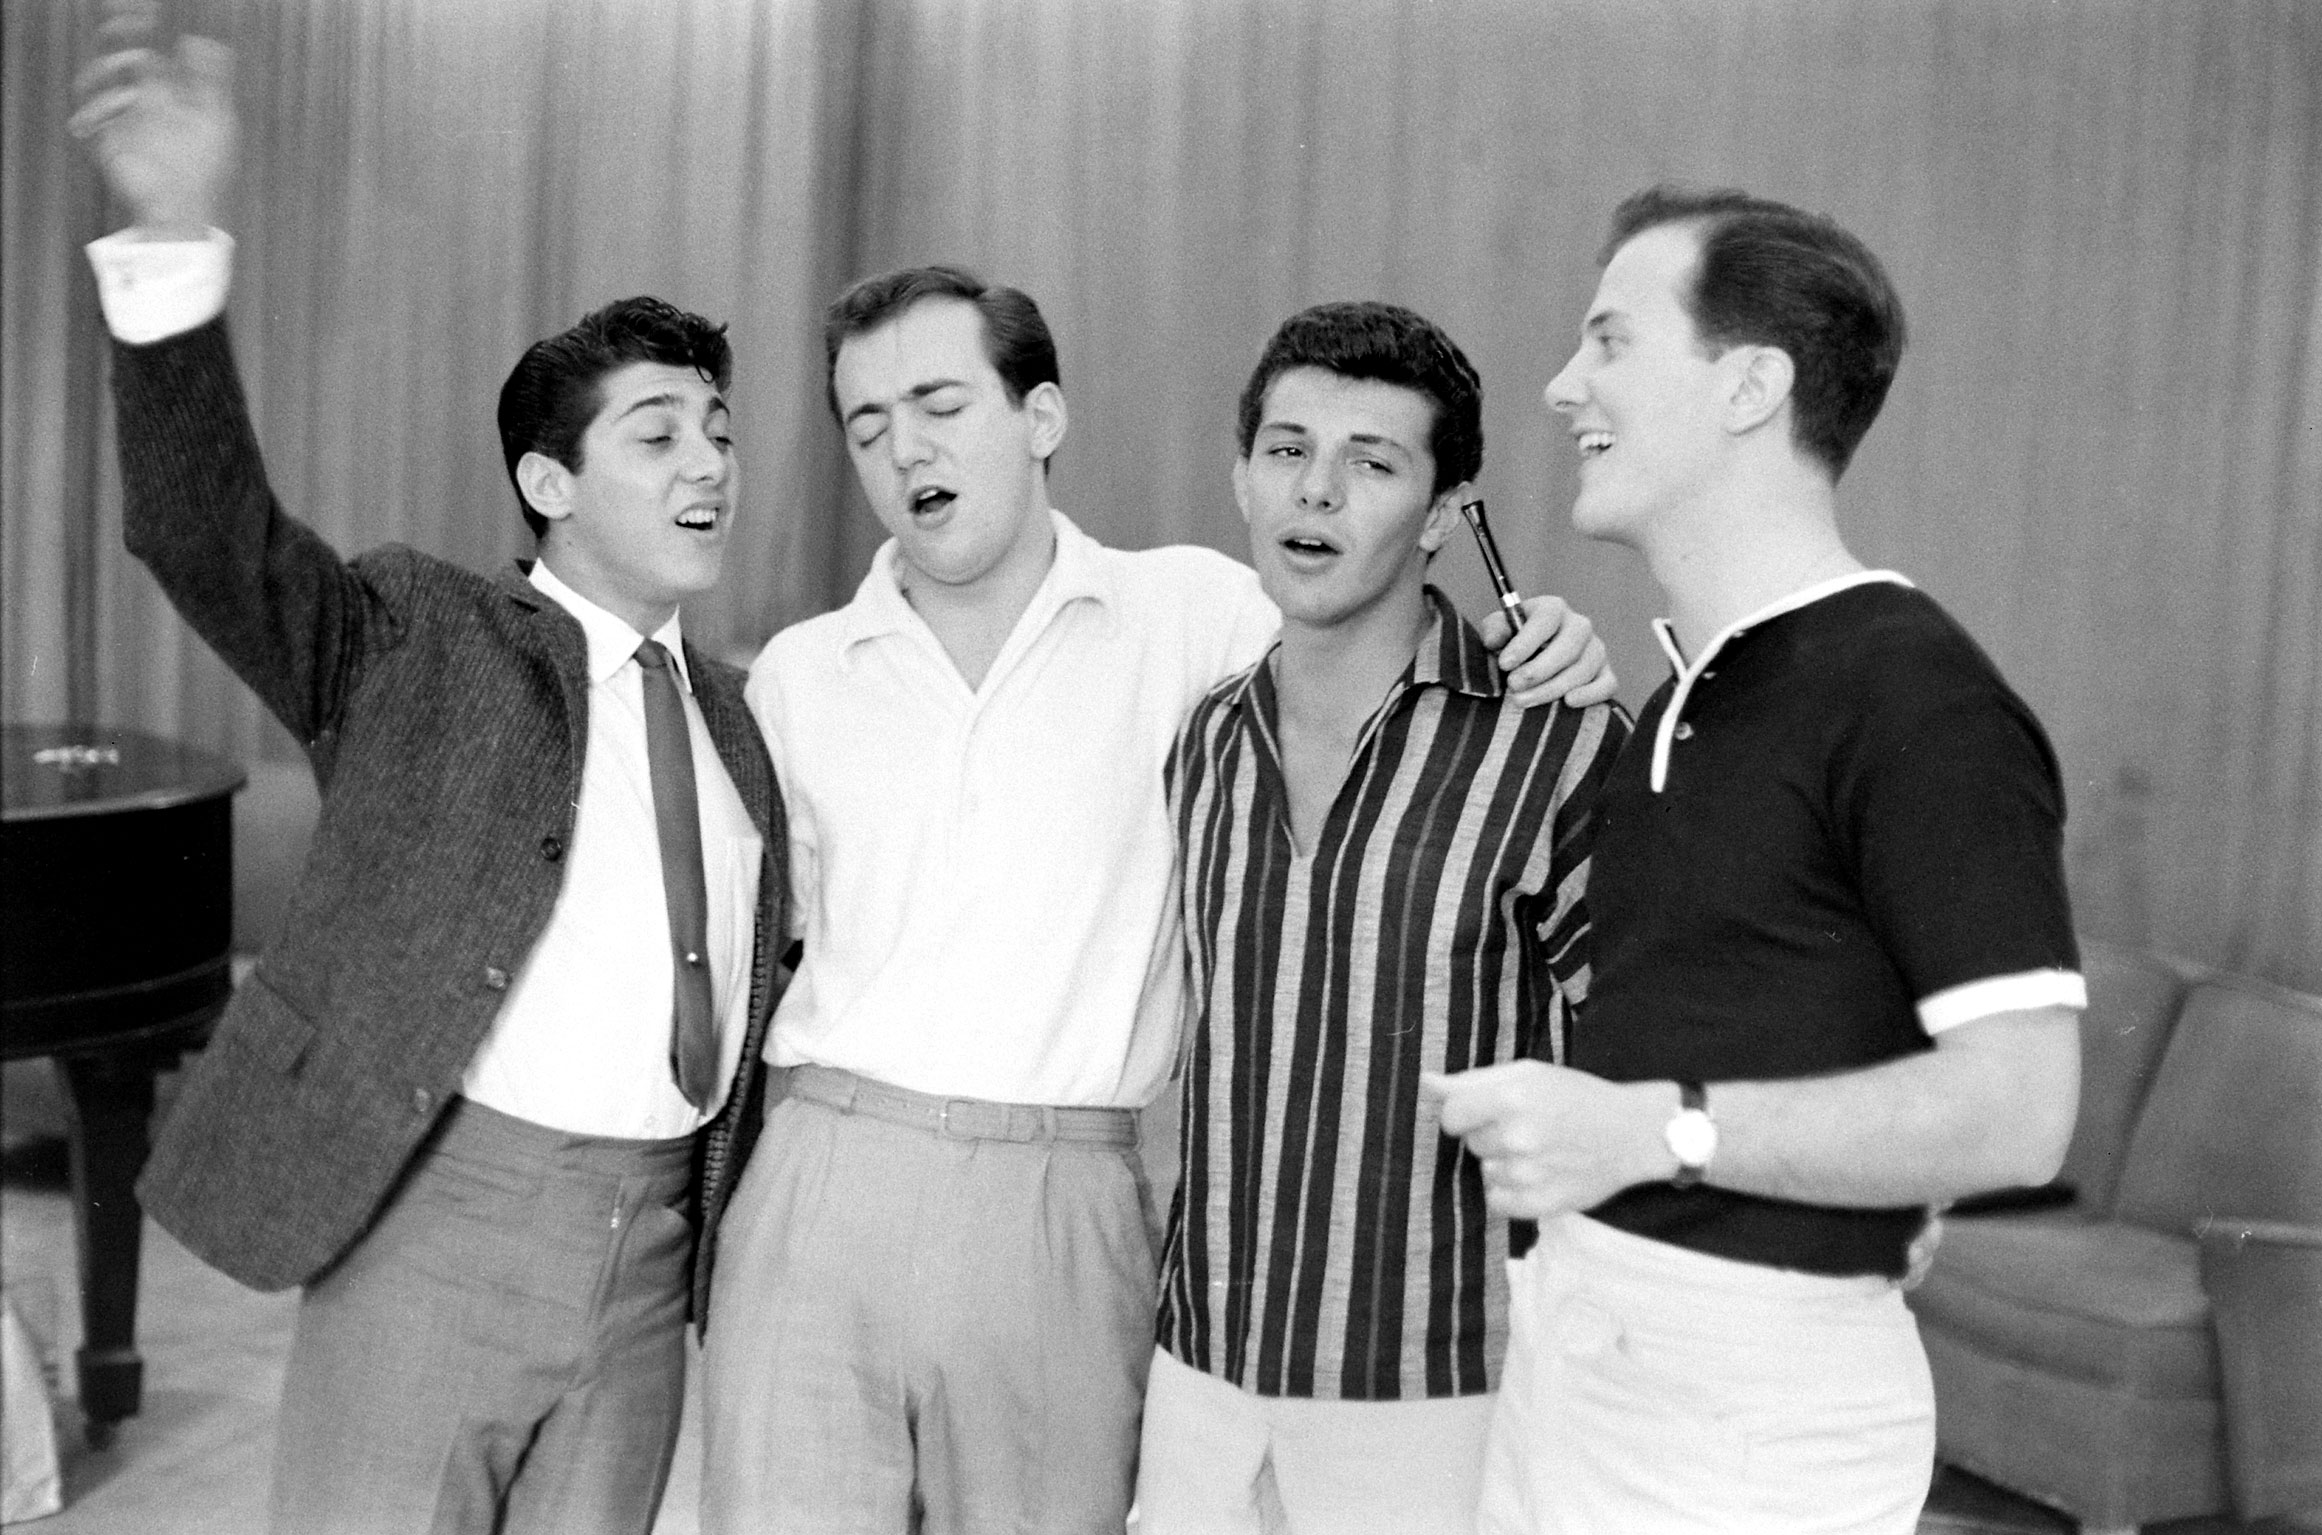 Paul Anka, Bobby Darin, Frankie Avalon and Pat Boone rehearsing, 1960.